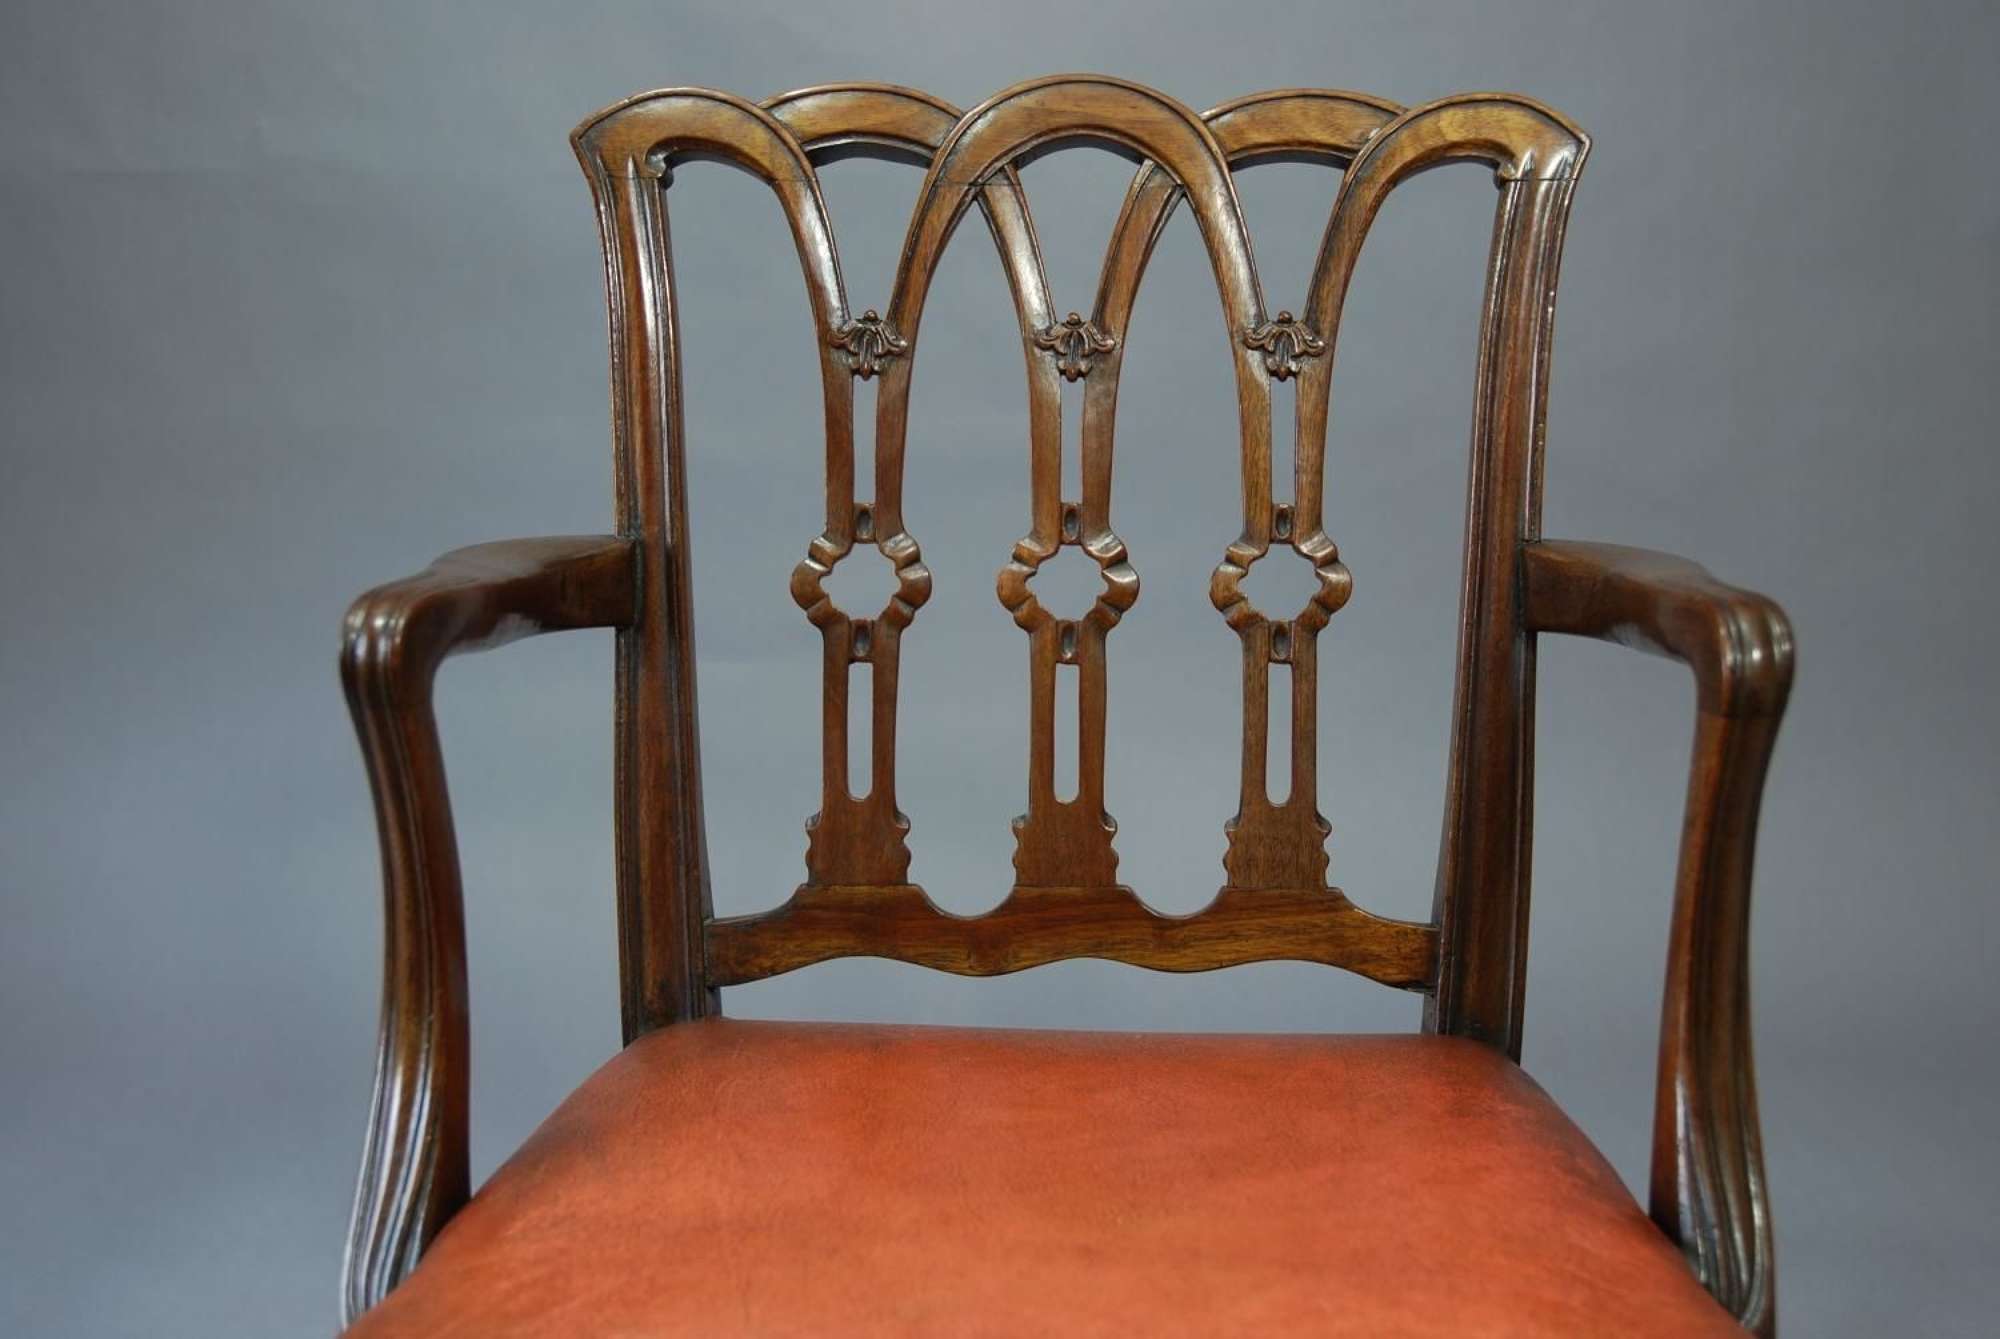 19th century mahogany childs chair